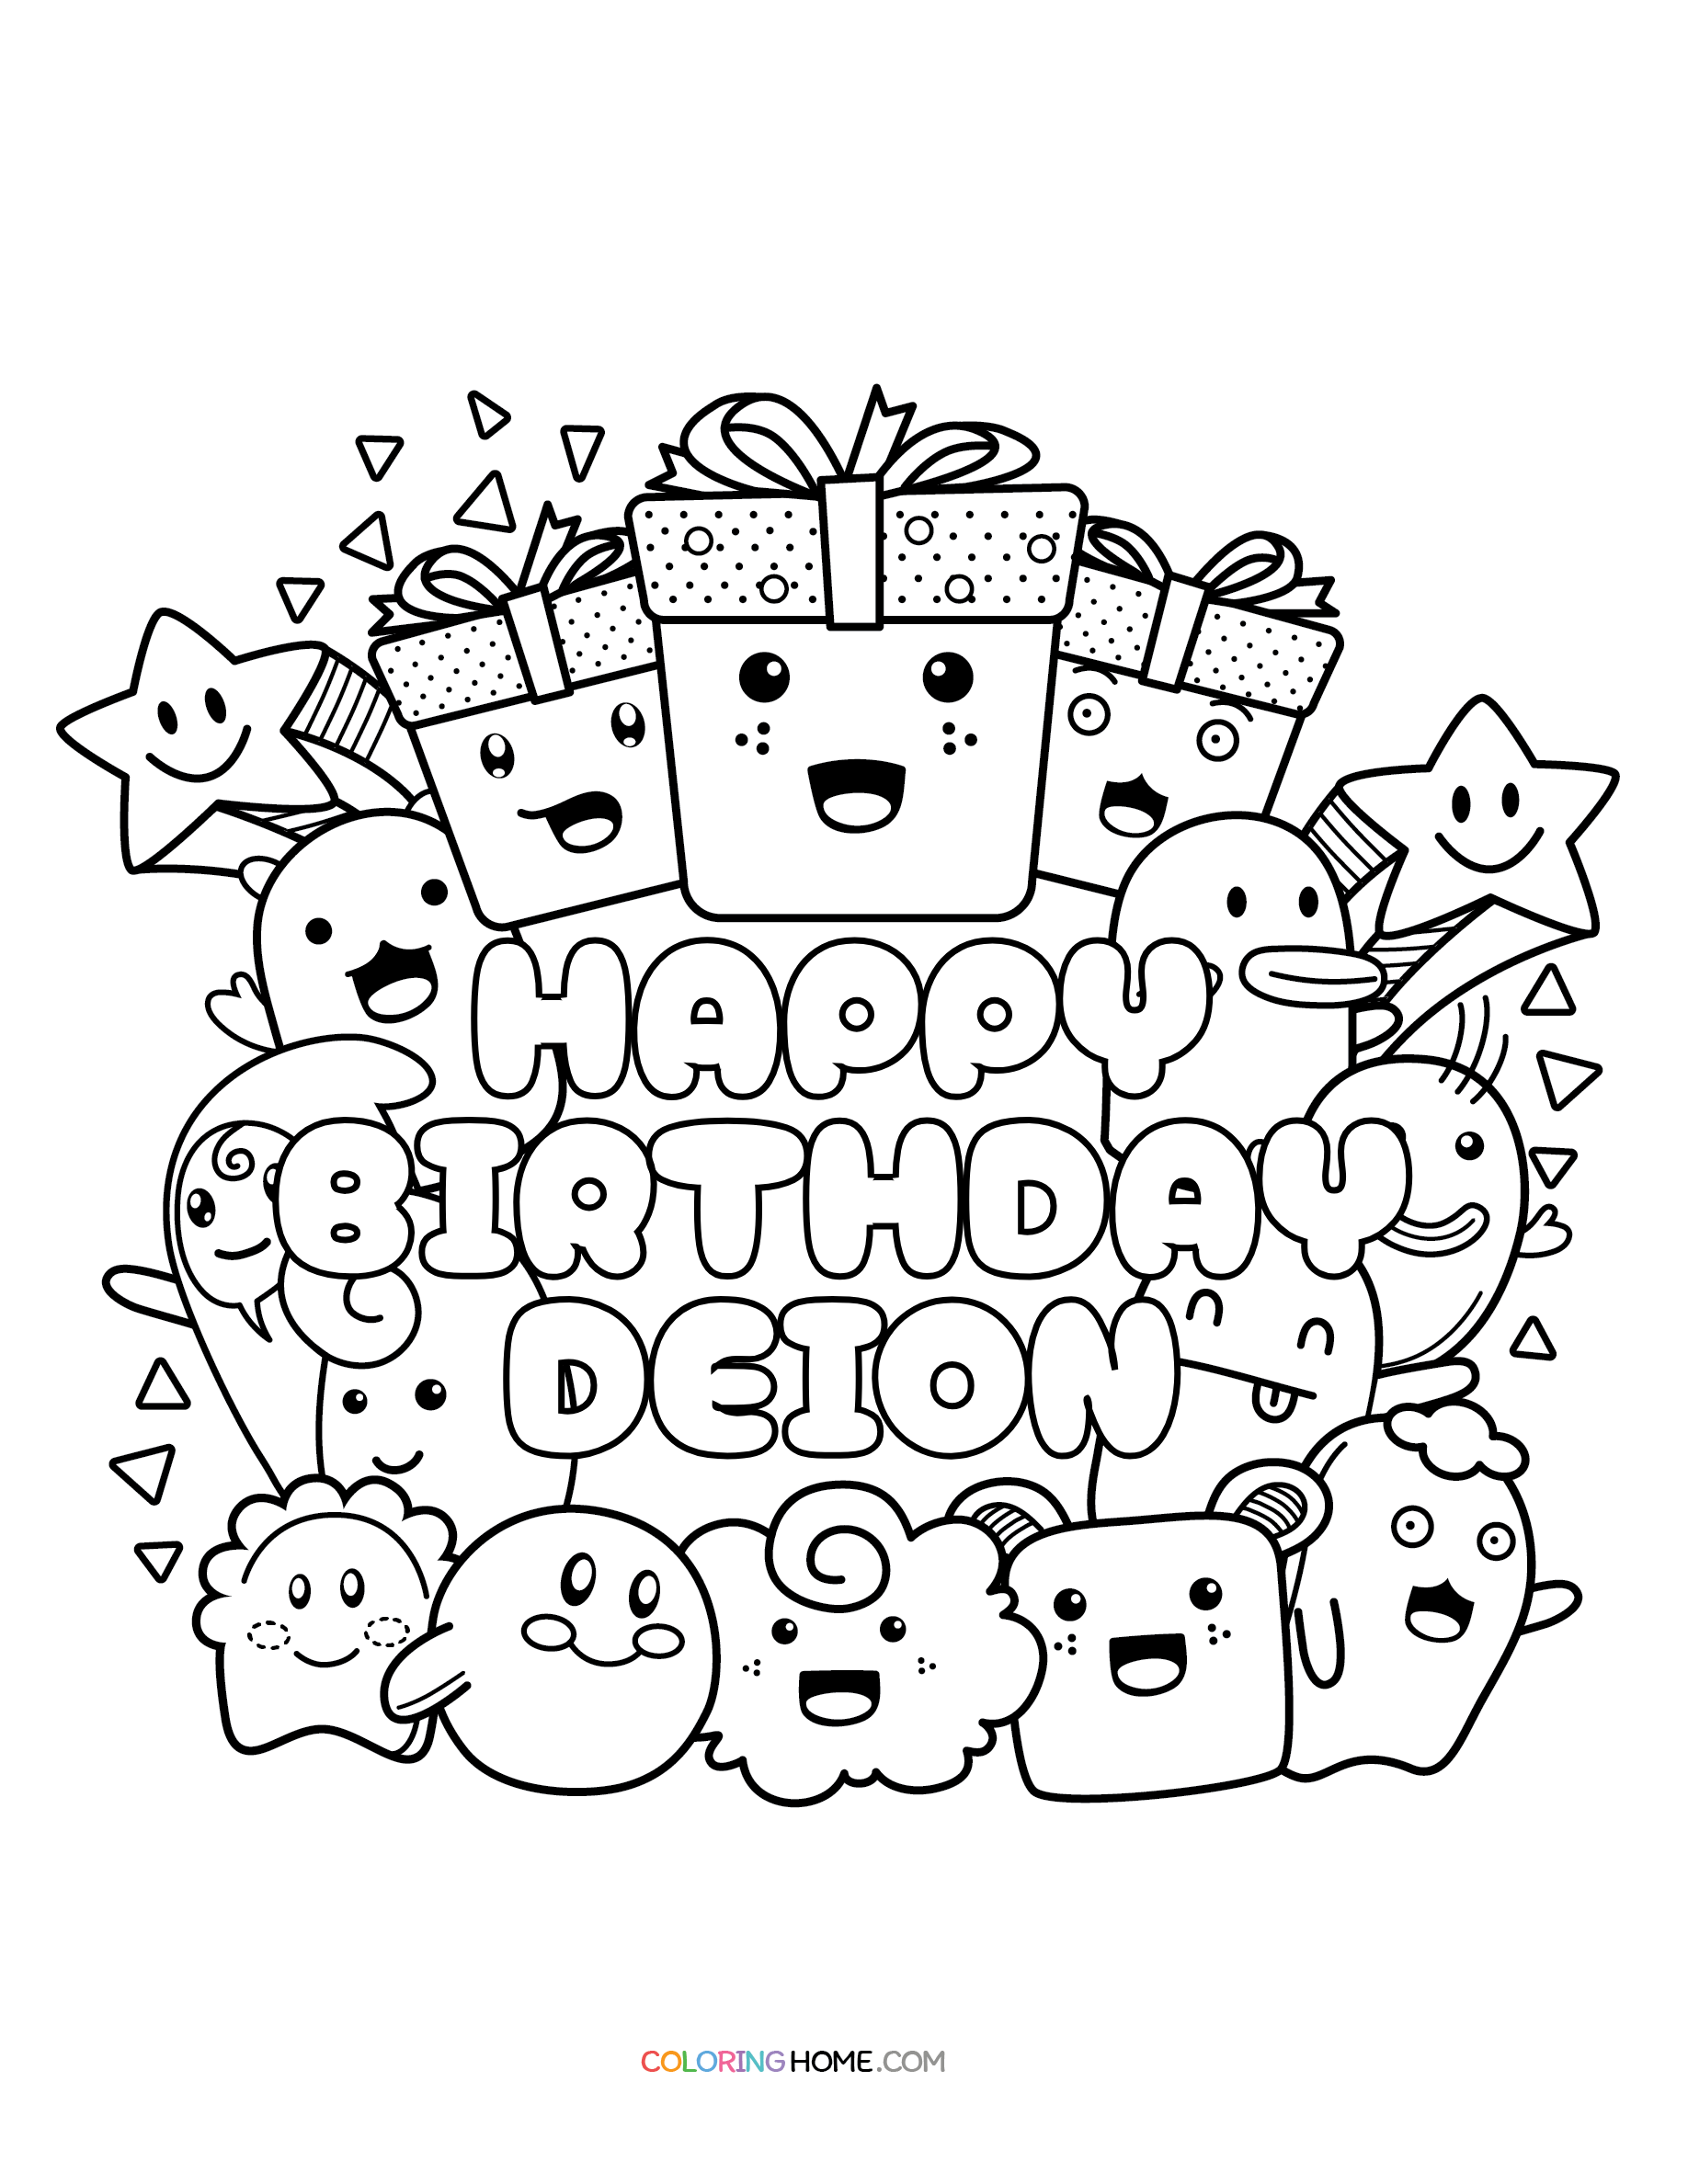 Happy Birthday Deion coloring page